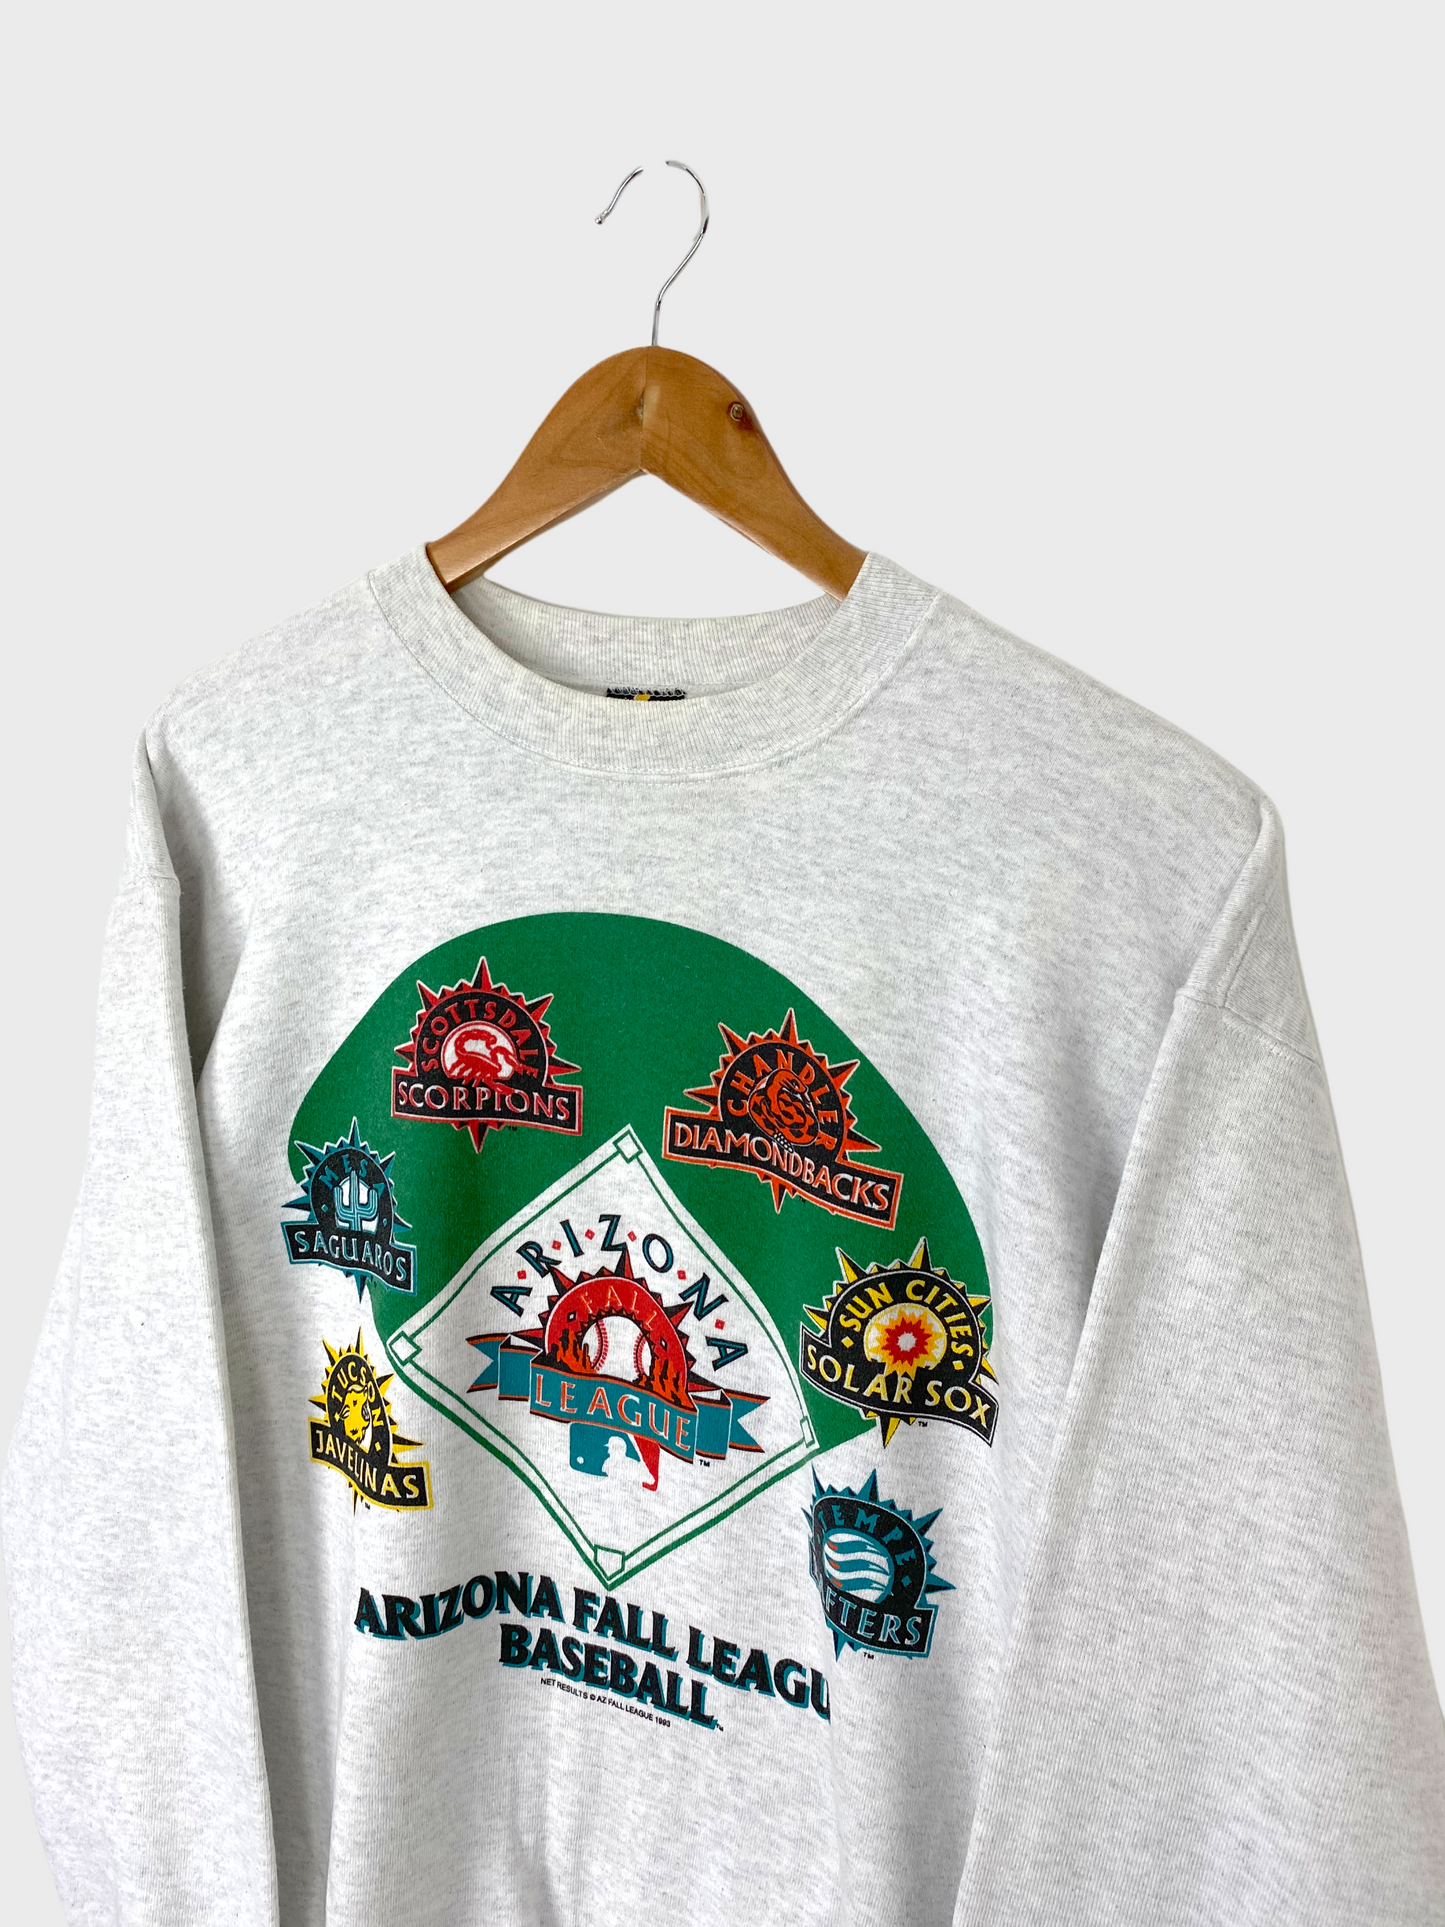 1993 Arizona Fall League Baseball USA Made Vintage Sweatshirt Size 6